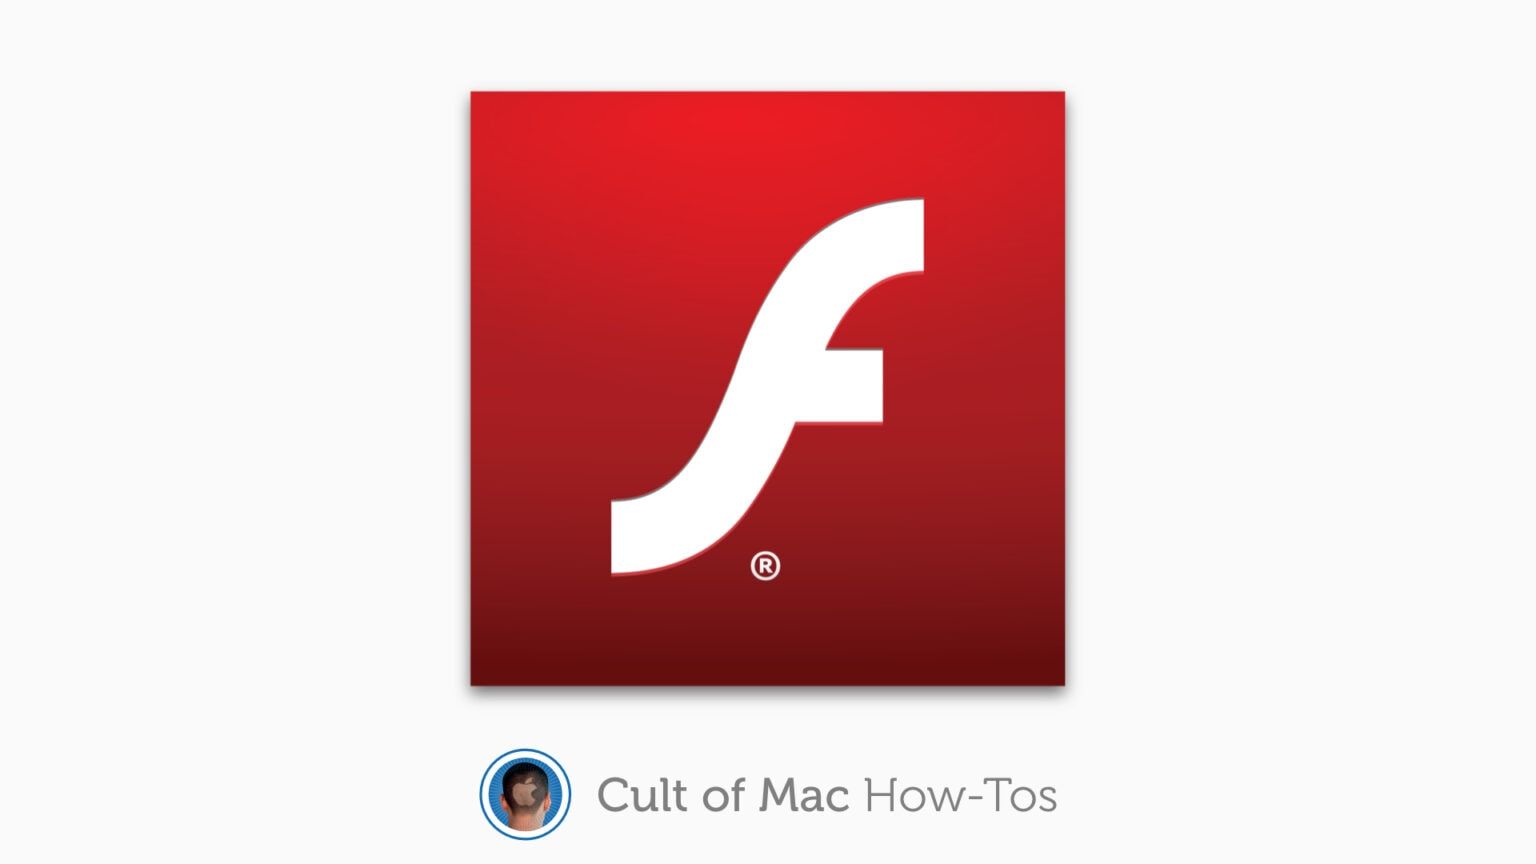 adob flash player for mac